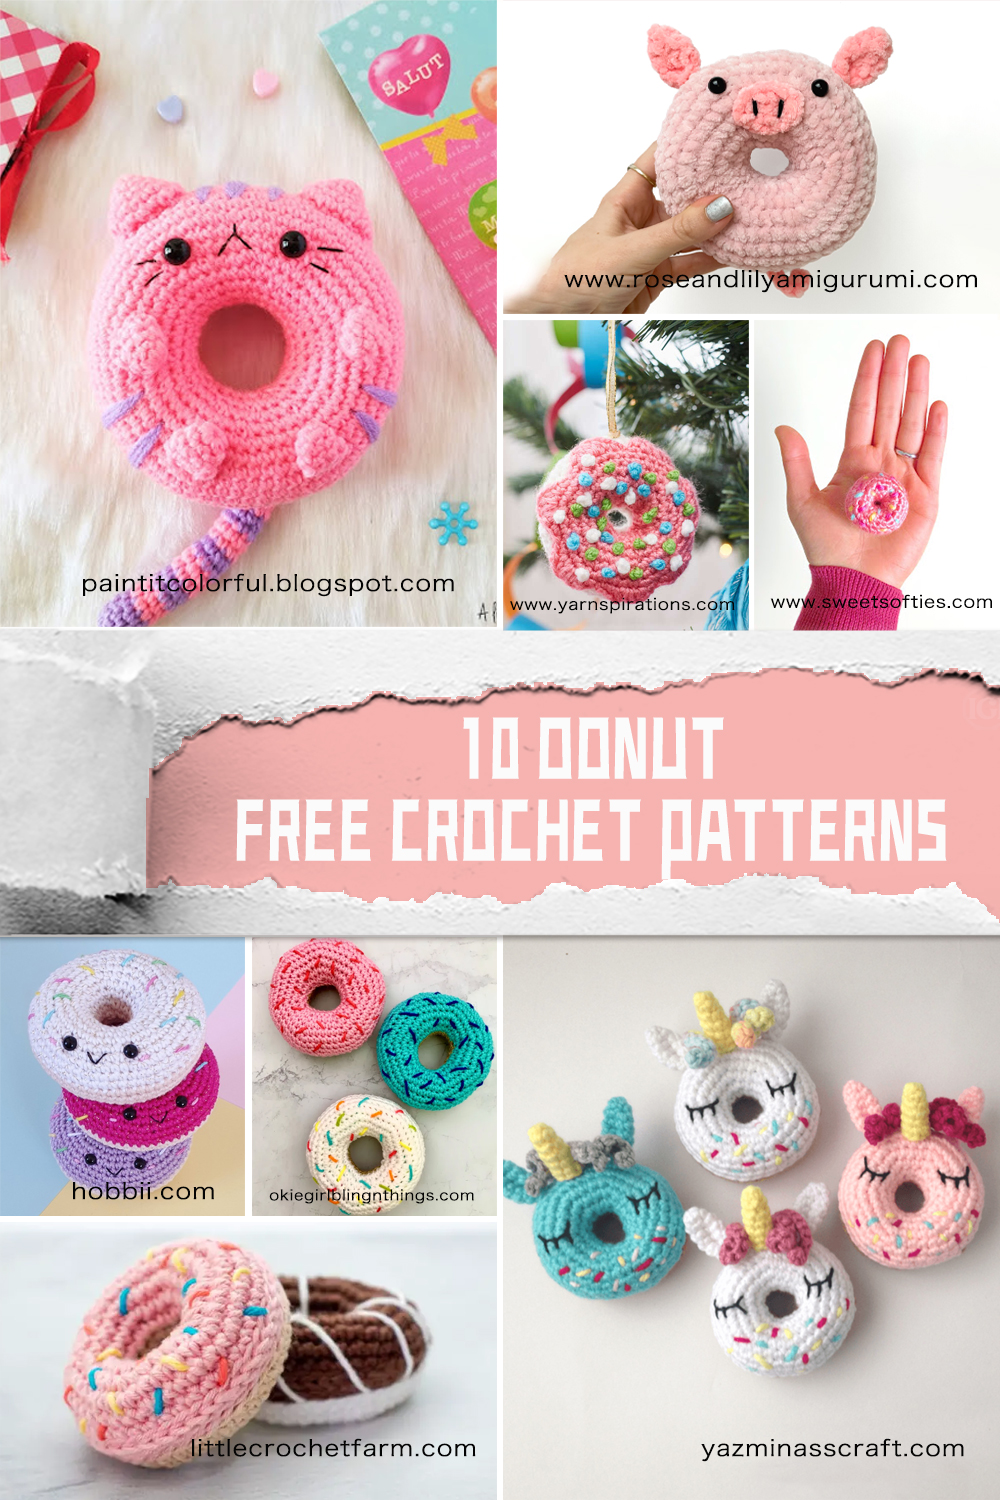 10 FREE Donut Crochet Patterns